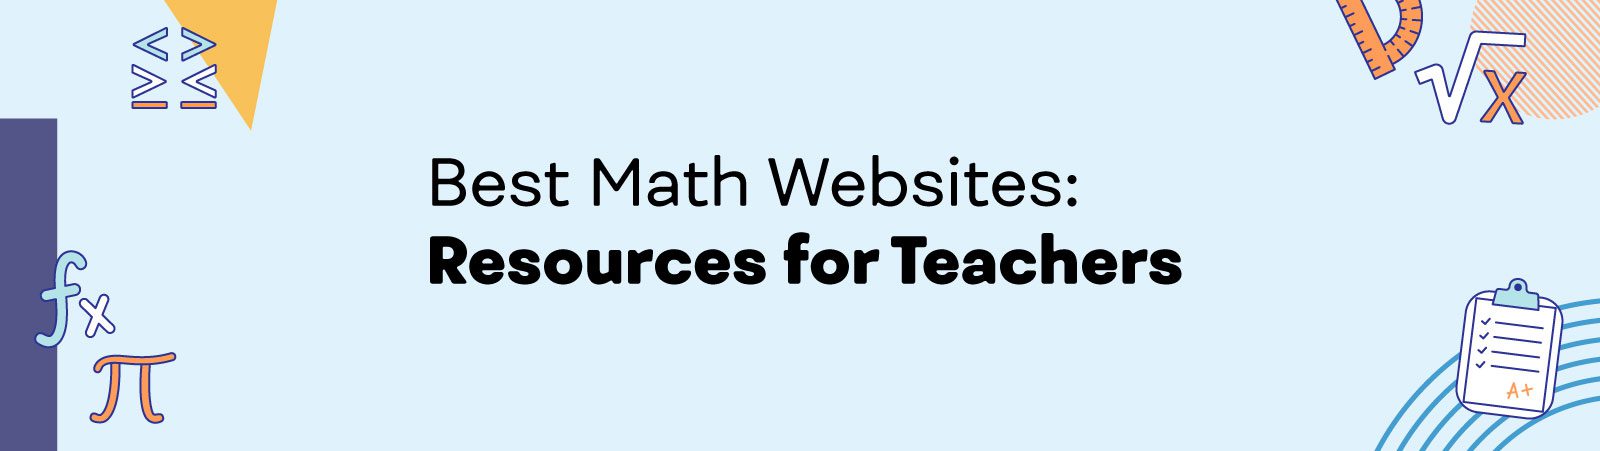 Best math websites: Resources for teachers.